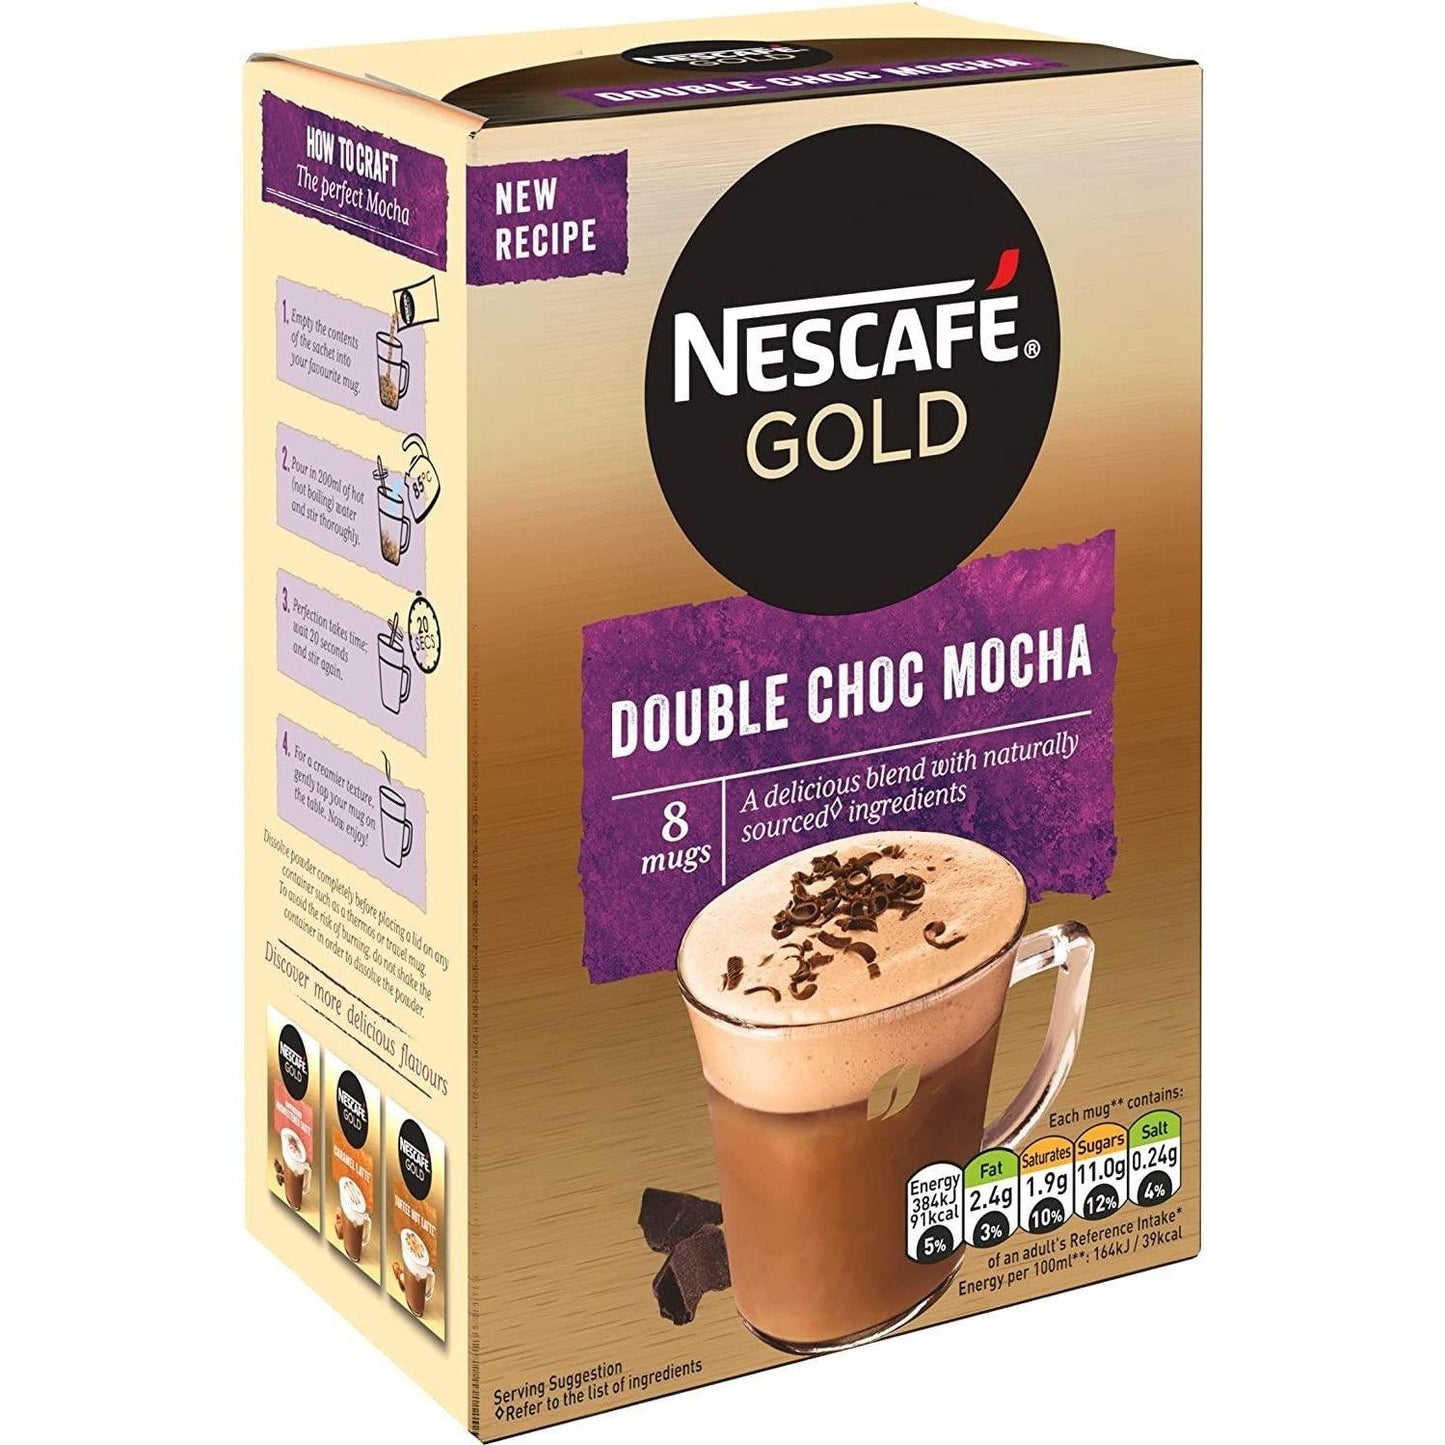 Nescafe Gold Double Choc Mocha 8 Pack 184g